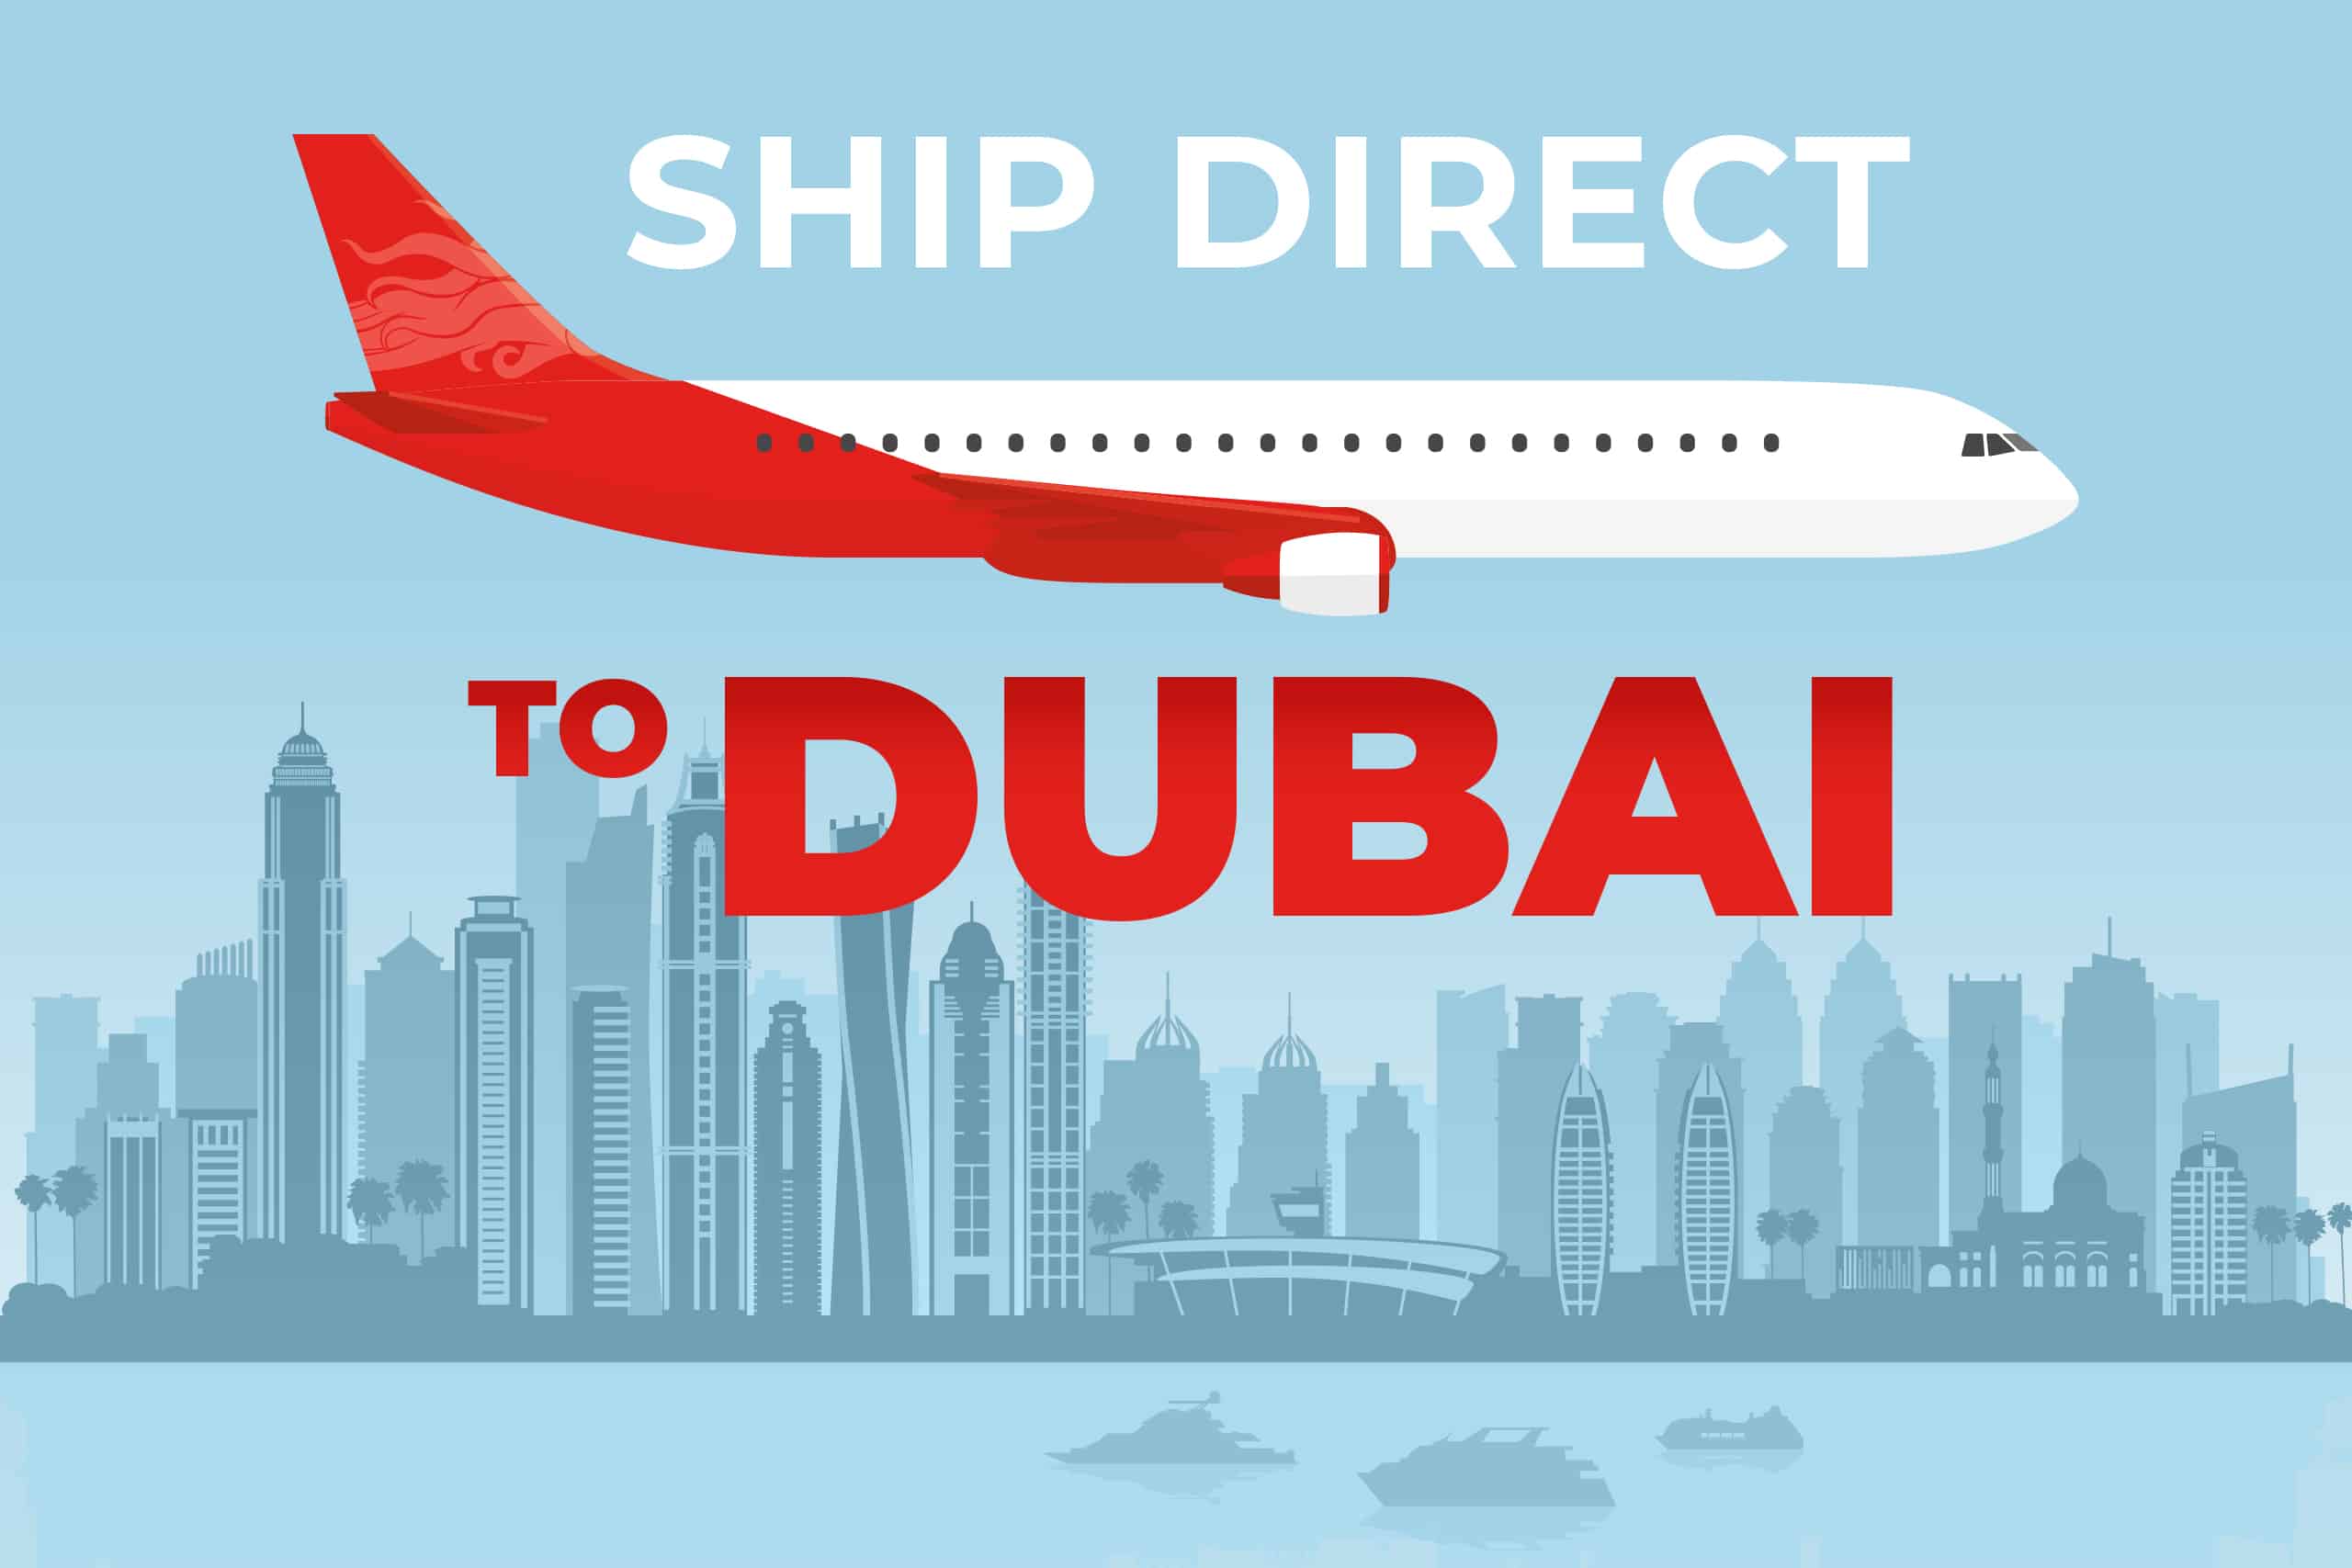 Europa Dubai direct consol, a specialist air freight service. 